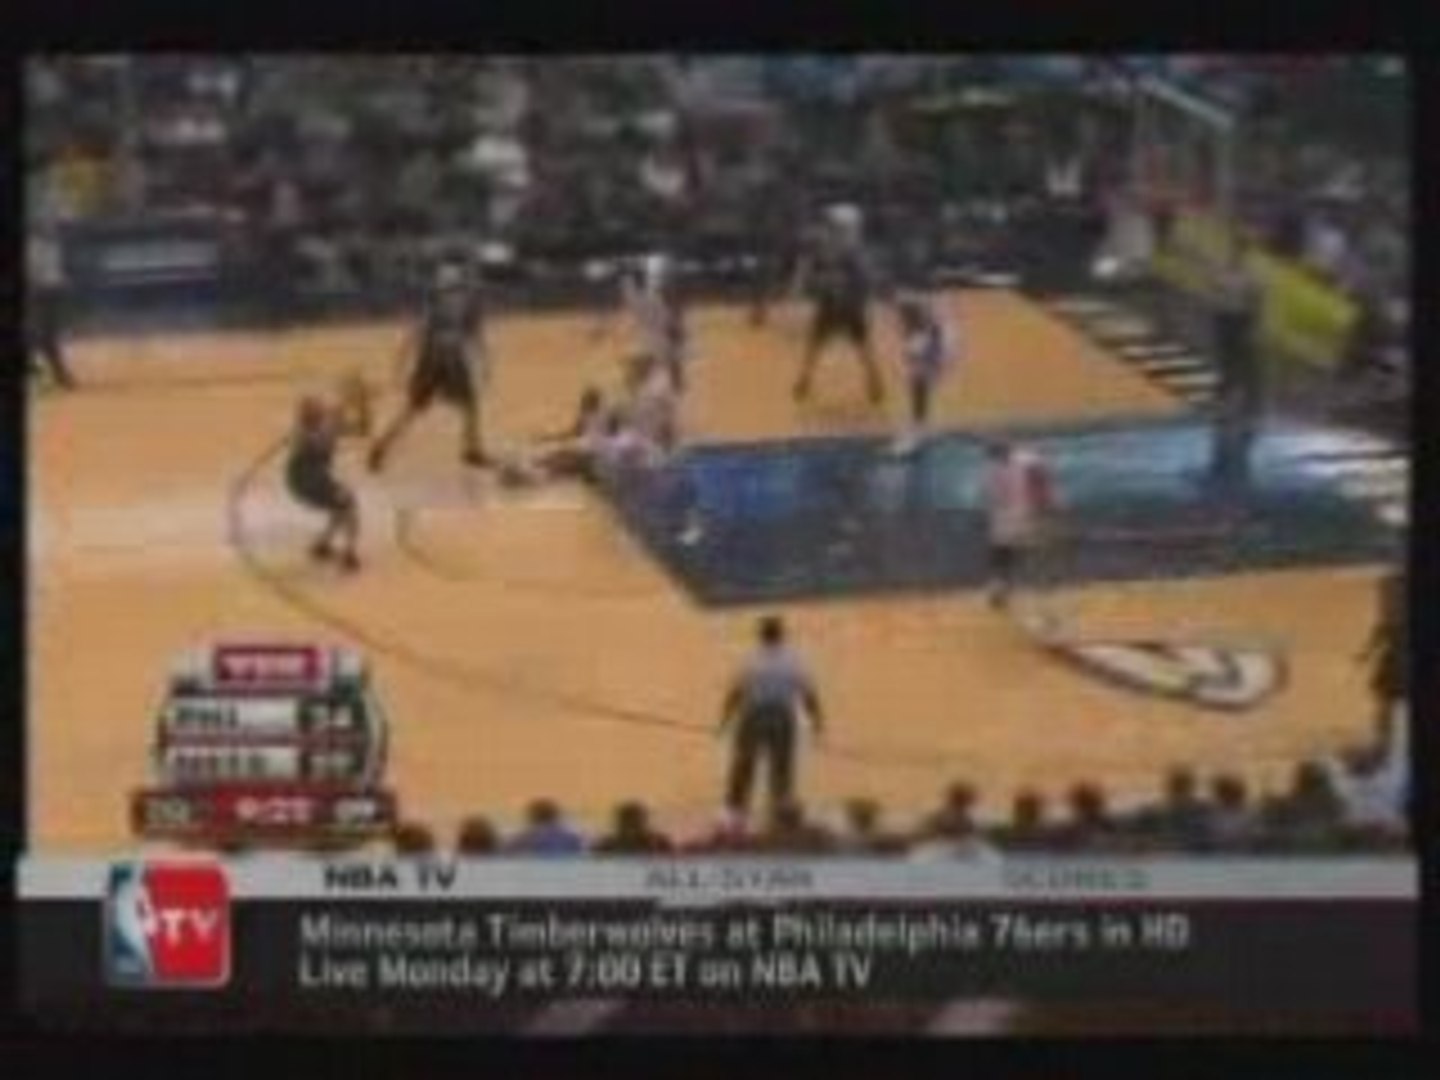 NBA Basketball - Allen Iverson - Anklebreaker